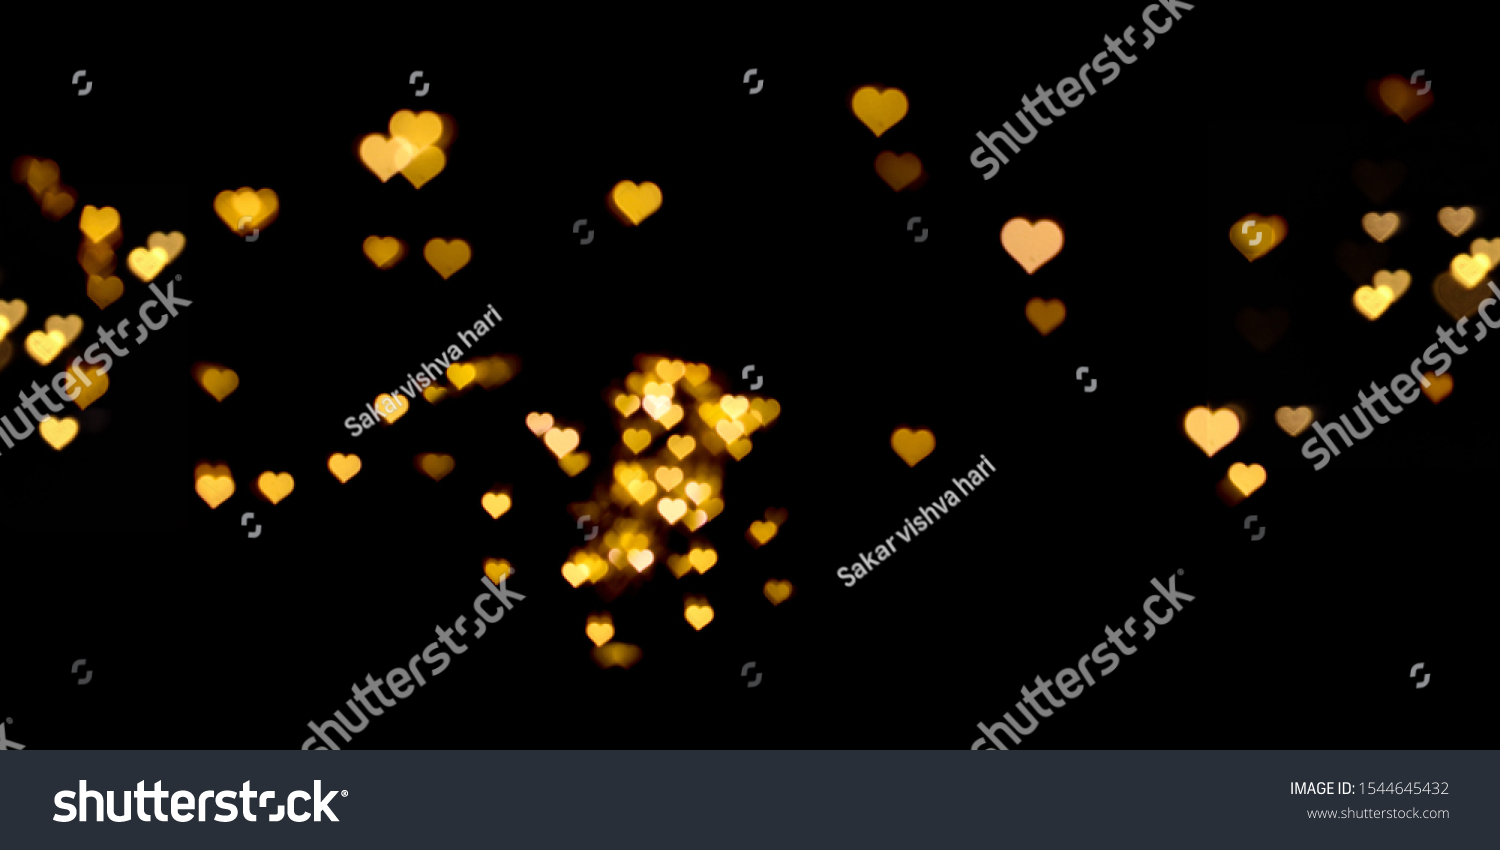 Yellow Glowing Stars Black Background Stock Photo 1544645432 | Shutterstock